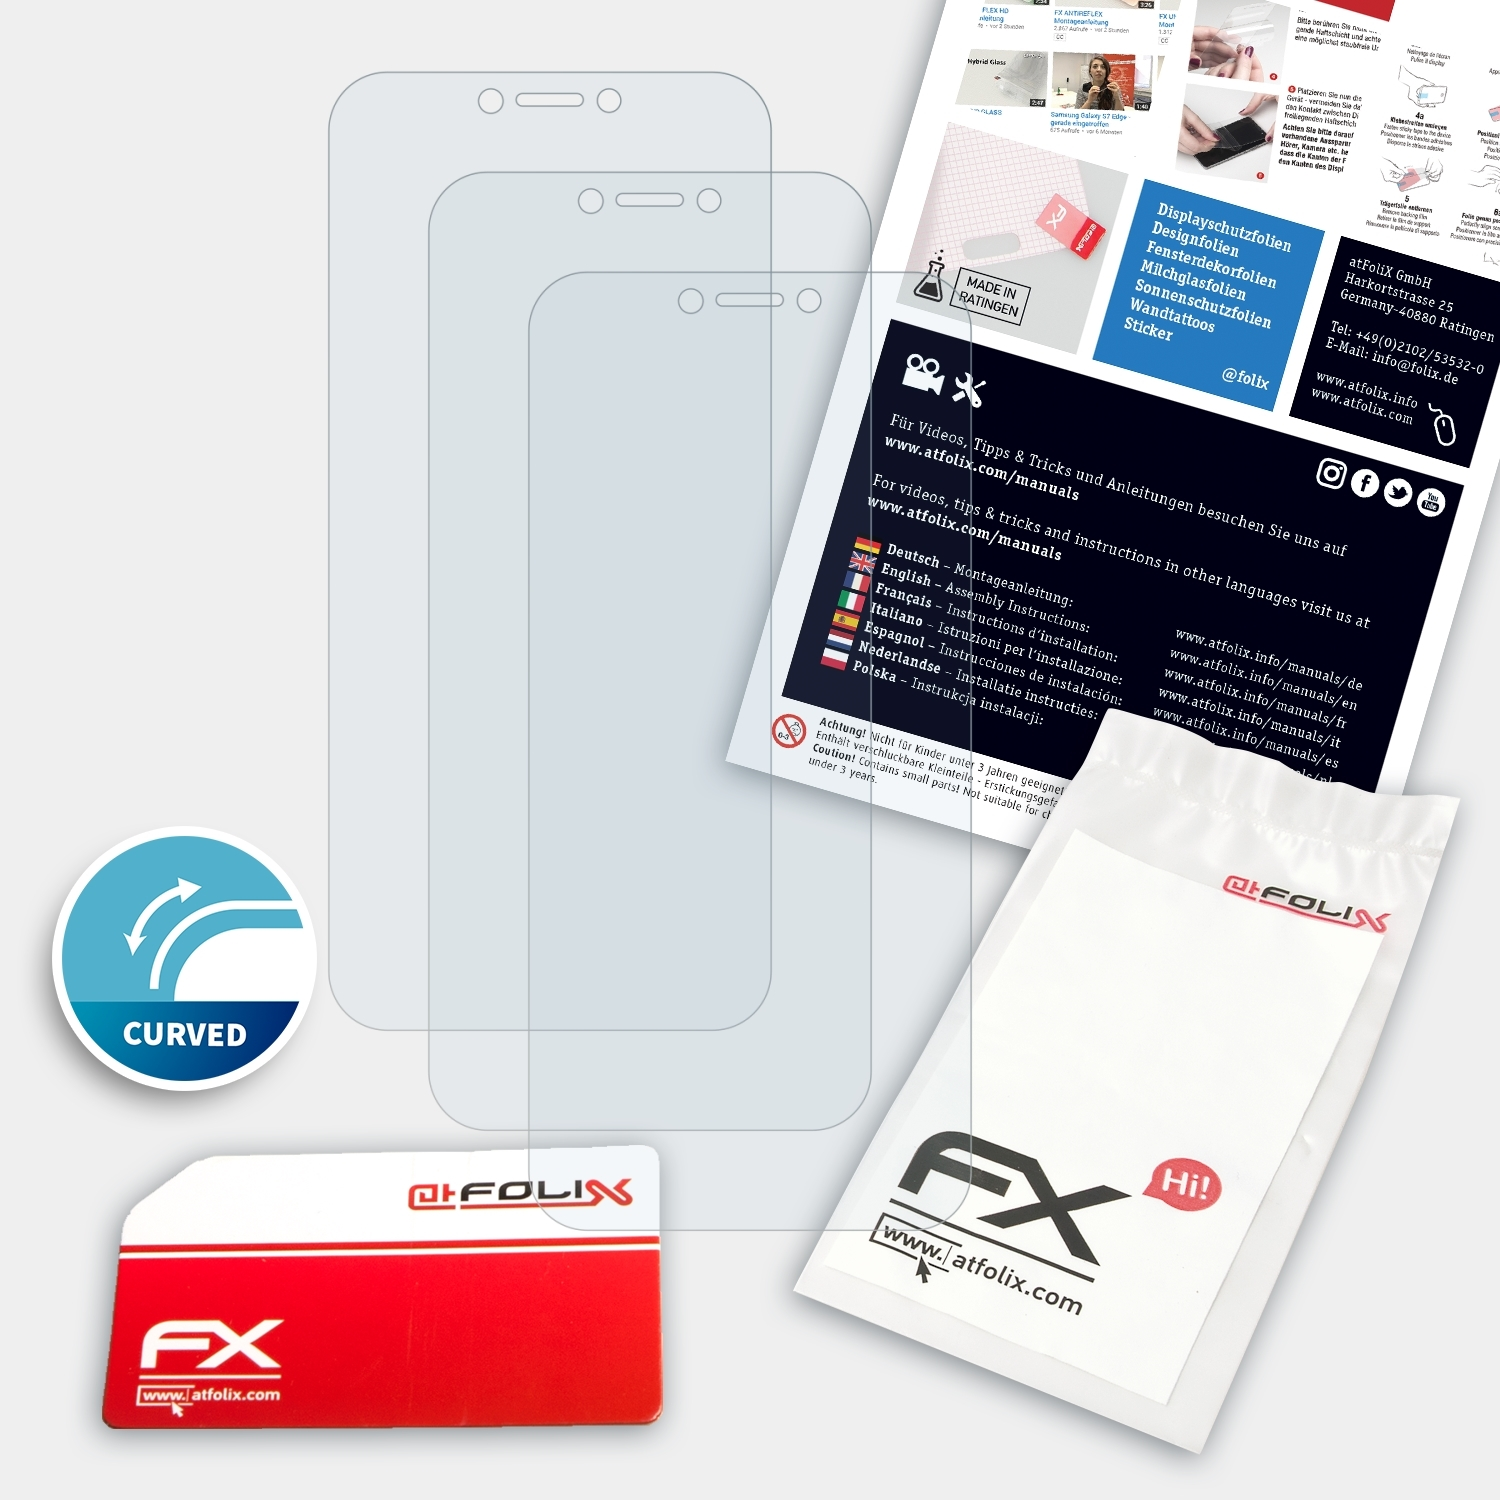 FX-ActiFleX 3x Honor Play) Displayschutz(für ATFOLIX Huawei